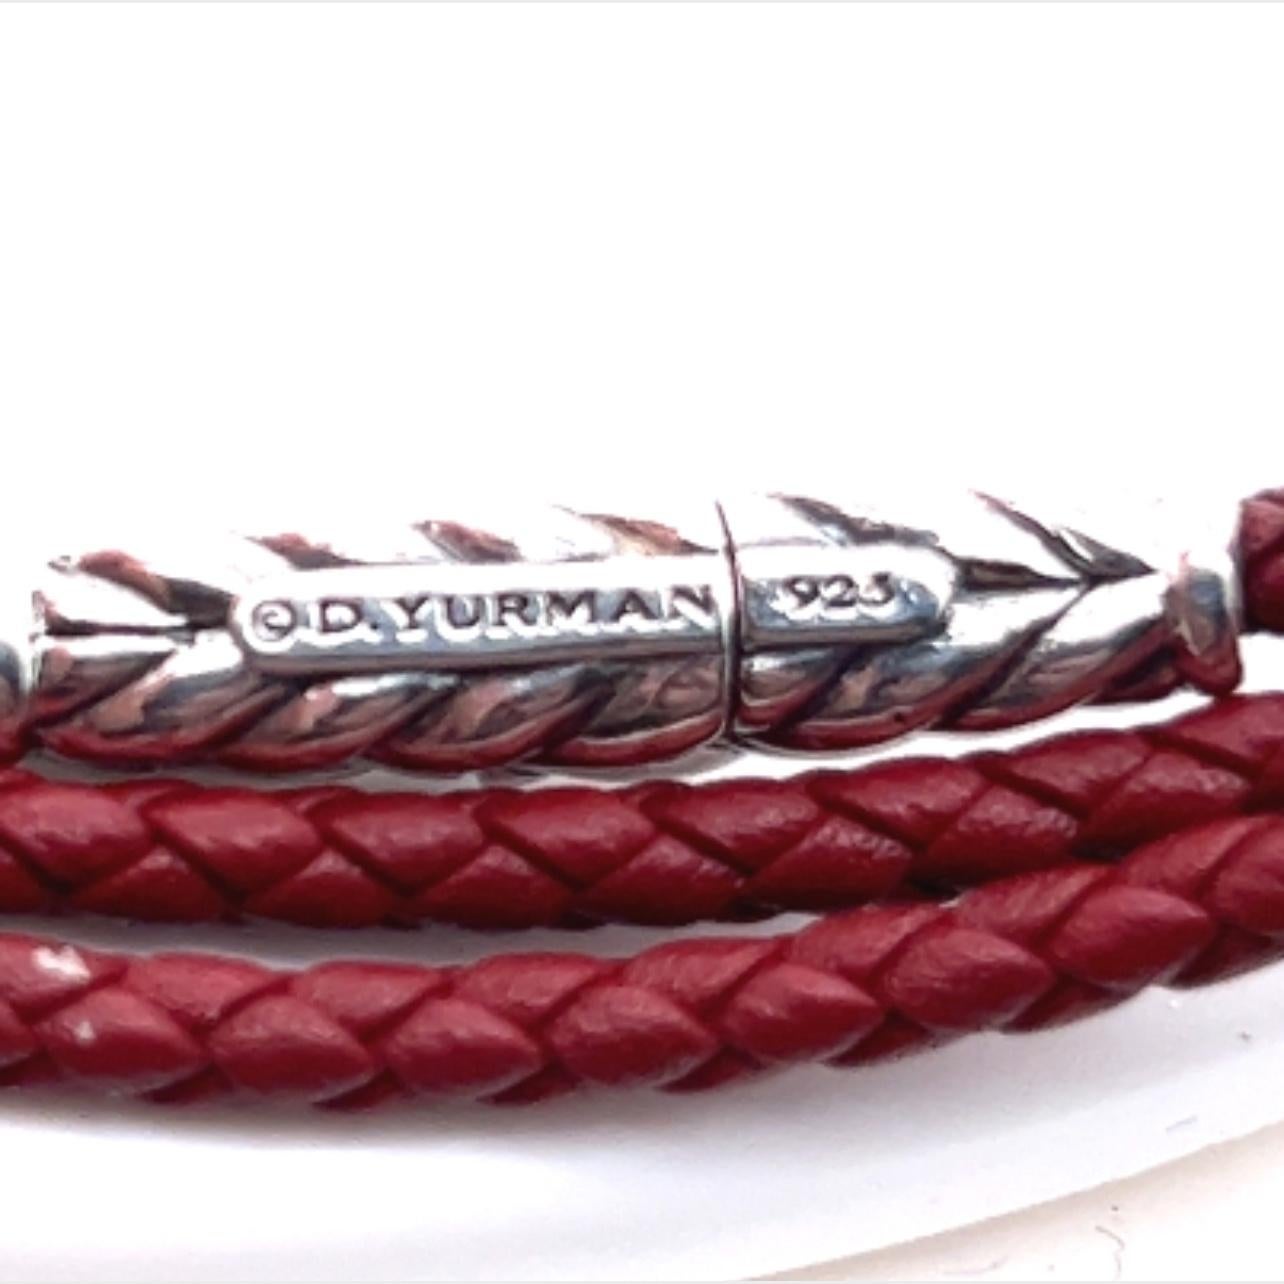 david yurman red string bracelet